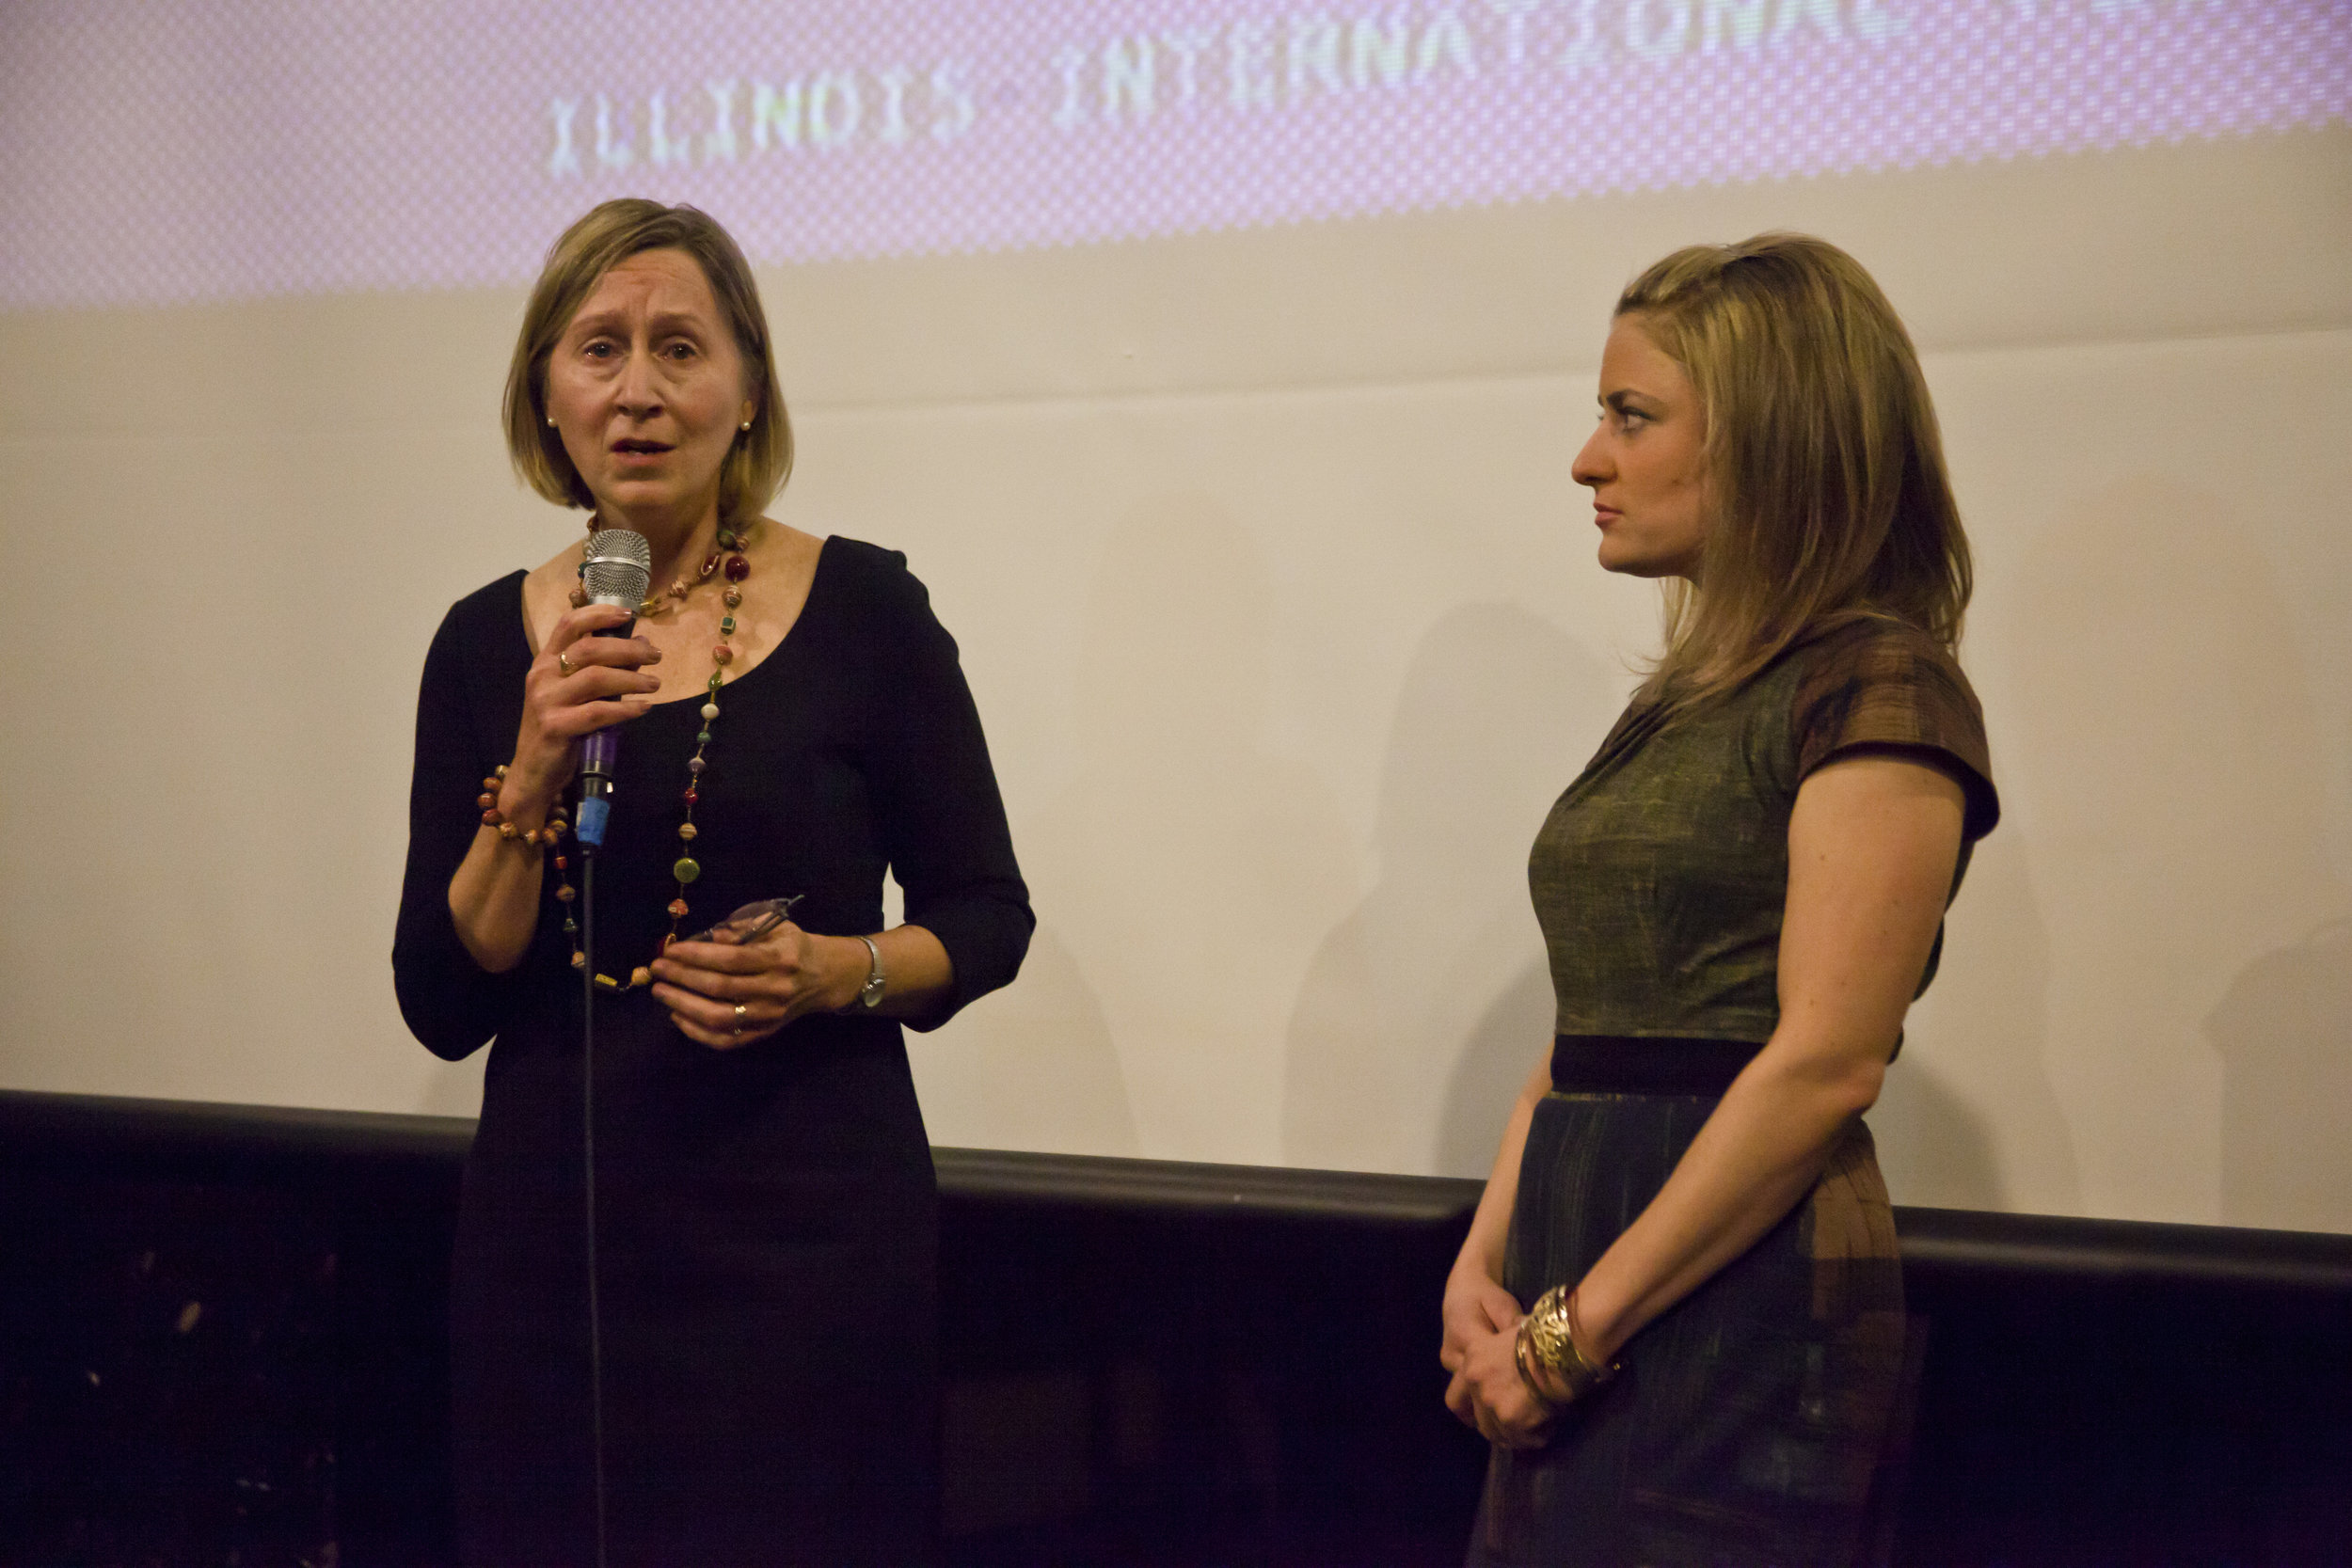 Q&A at Illinois International Film Festival